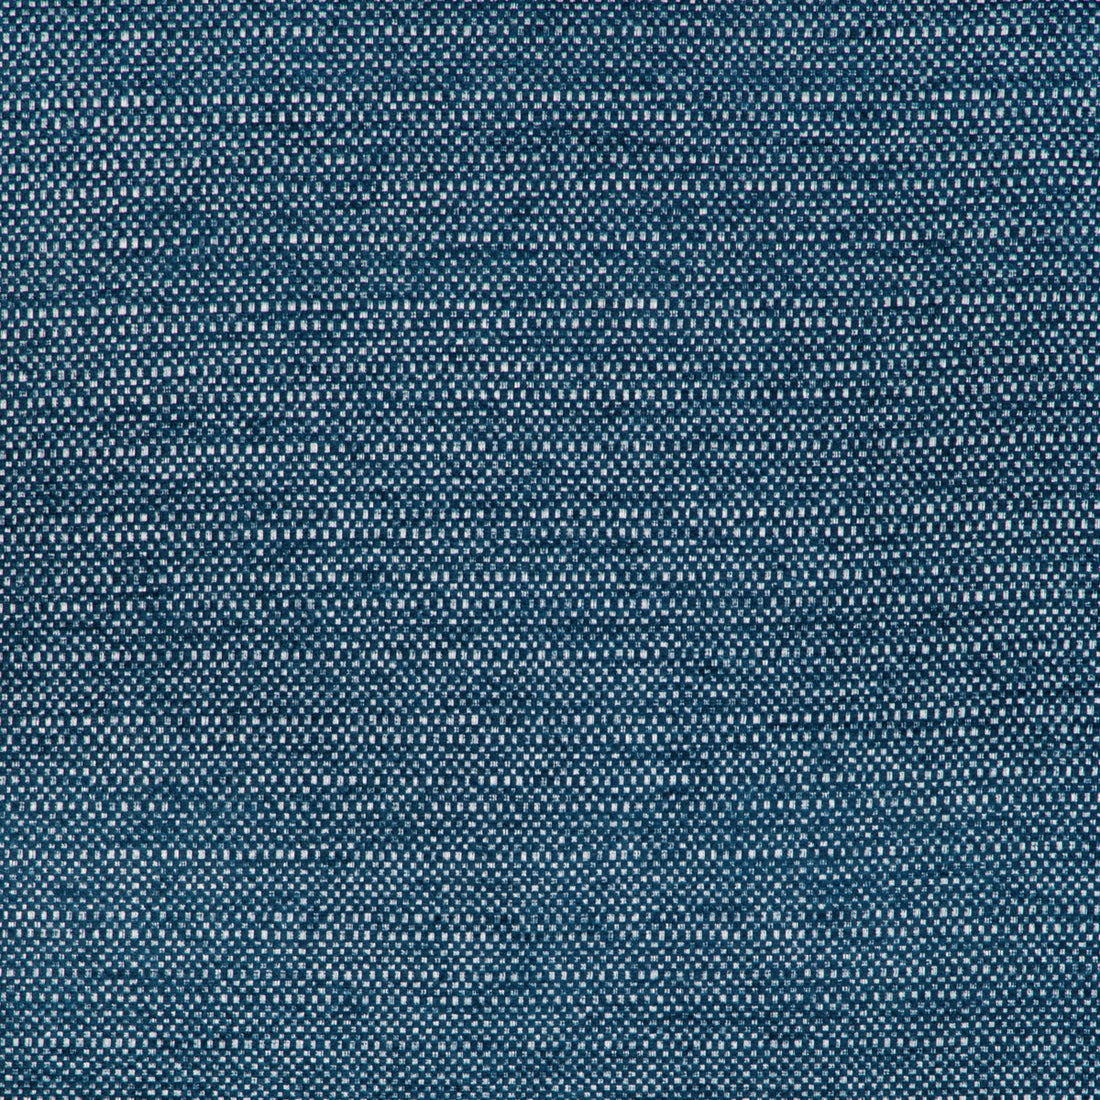 Kravet Design fabric in 36765-51 color - pattern 36765.51.0 - by Kravet Design in the Sea Island Indoor/Outdoor collection